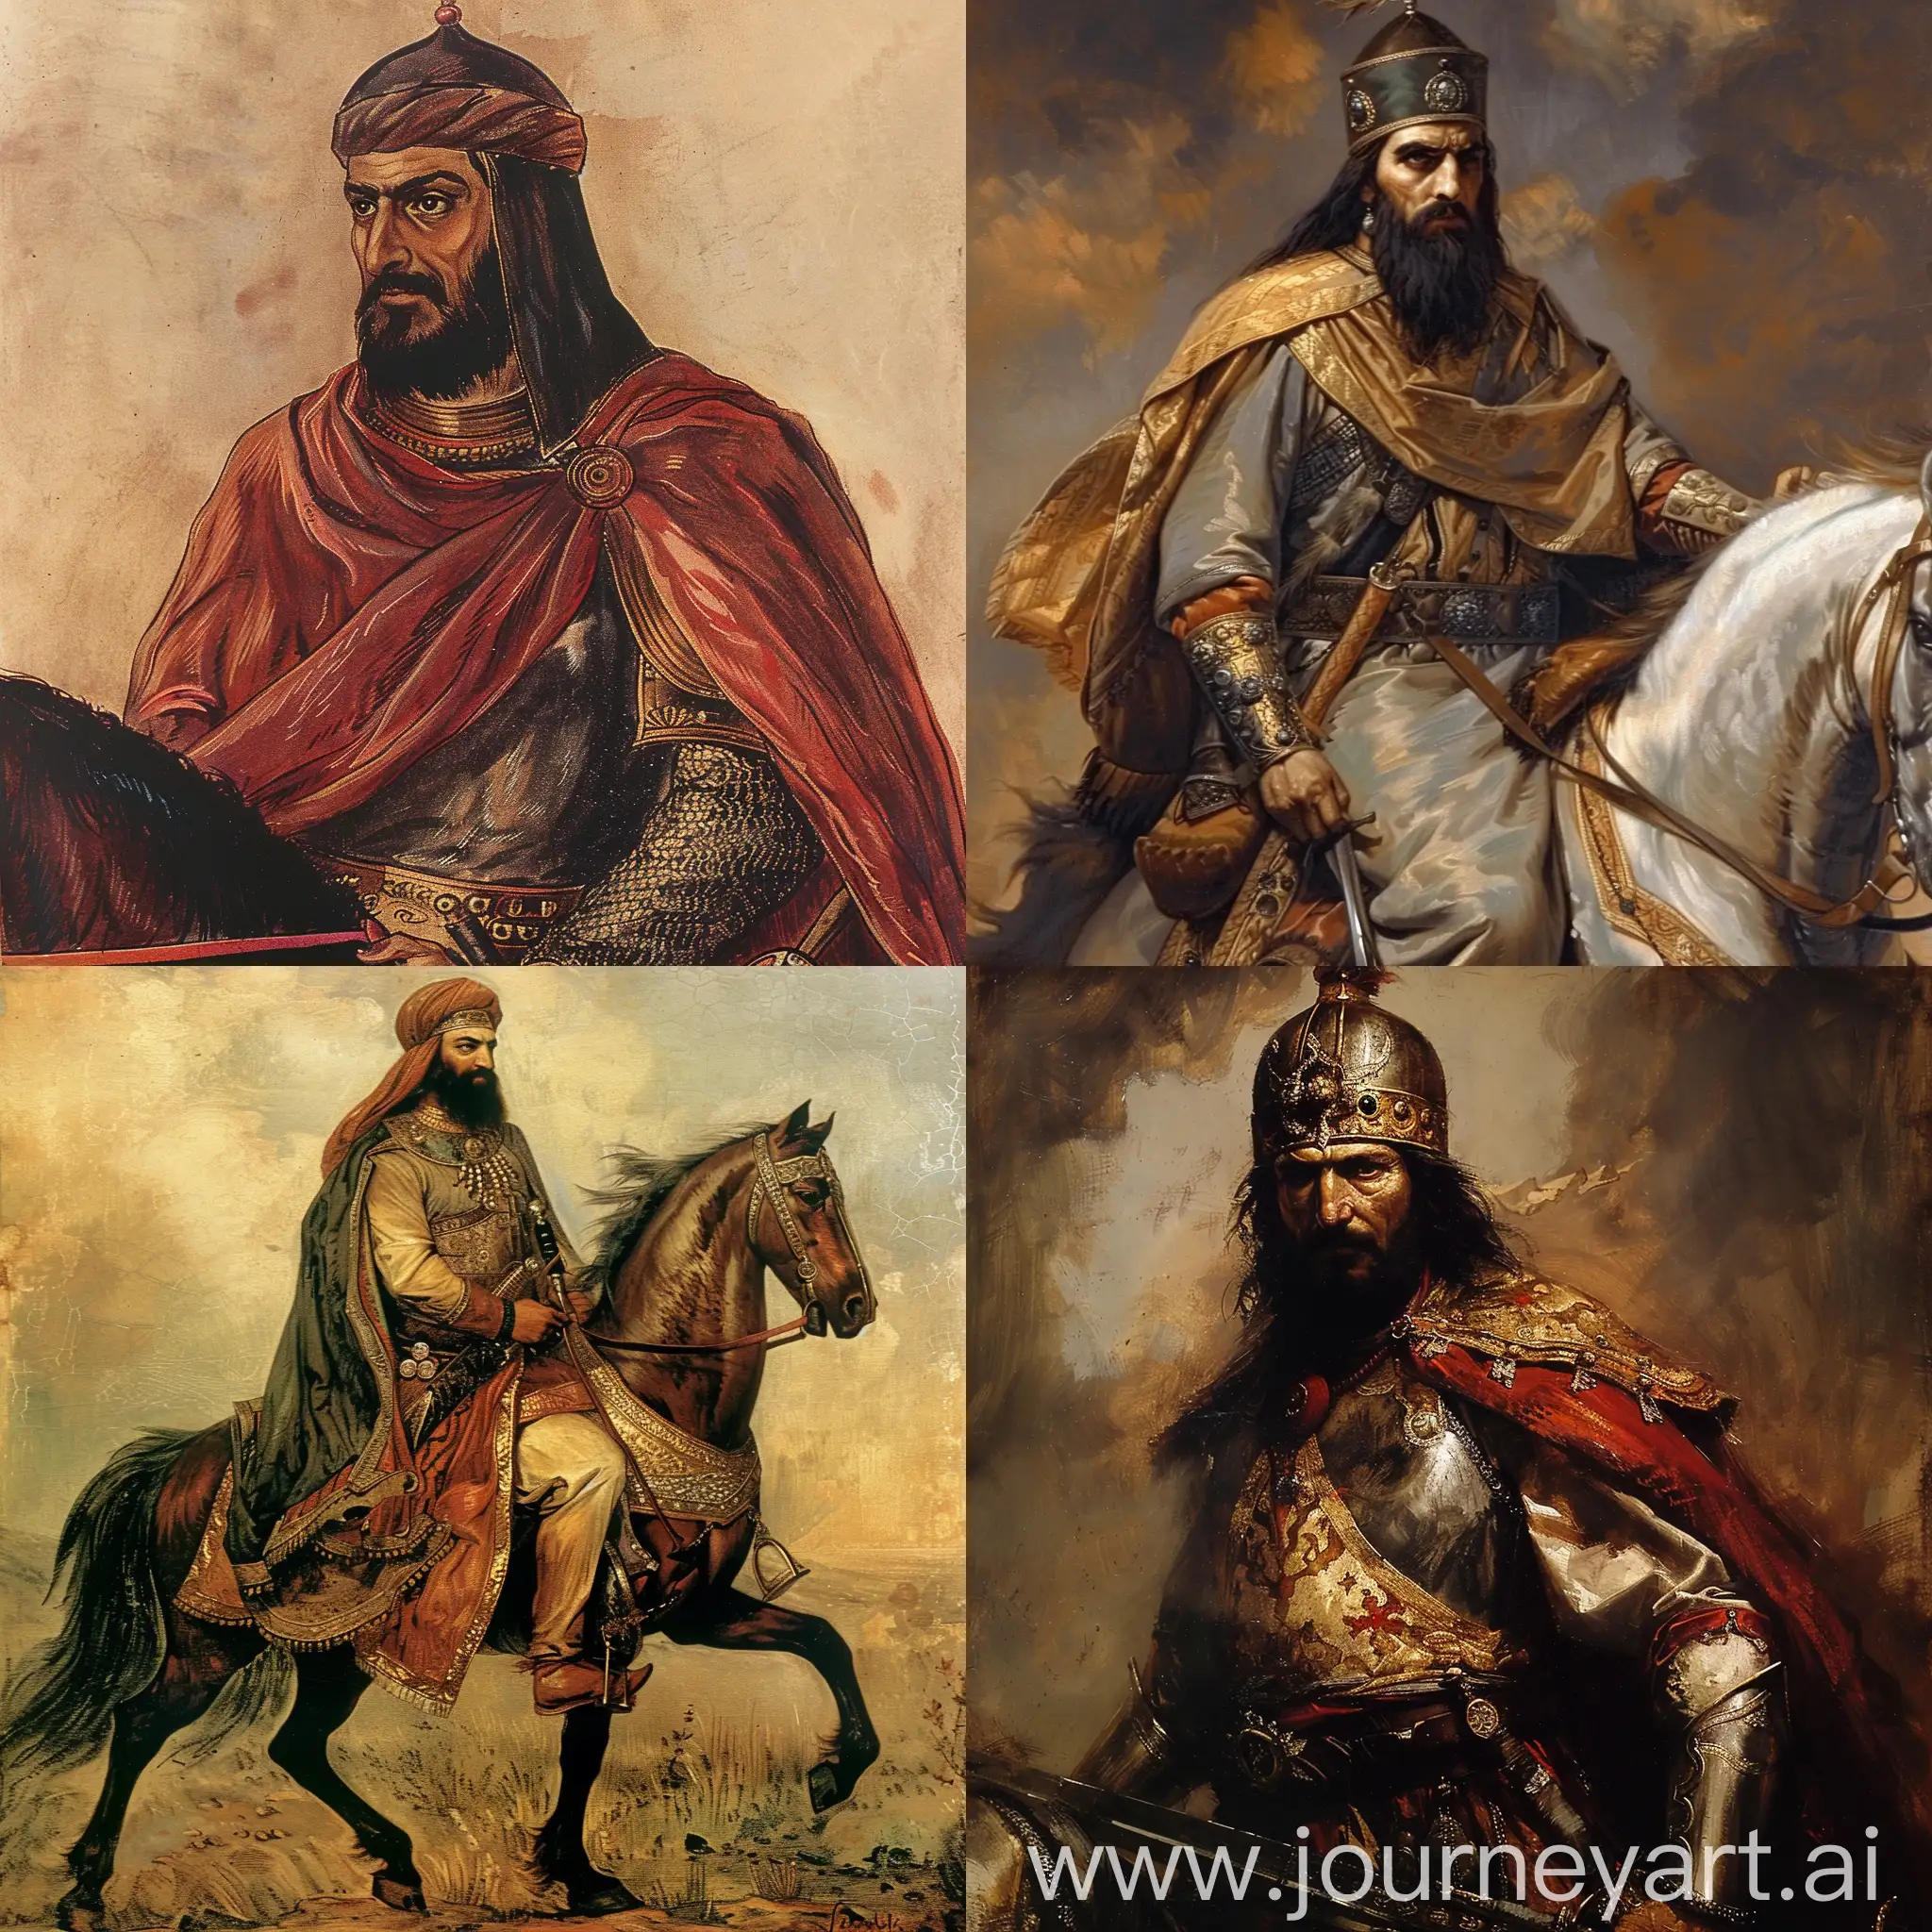 Salah-adDin-alAyubi-Legendary-Islamic-Warrior-Portrait-of-Valor-and-Leadership